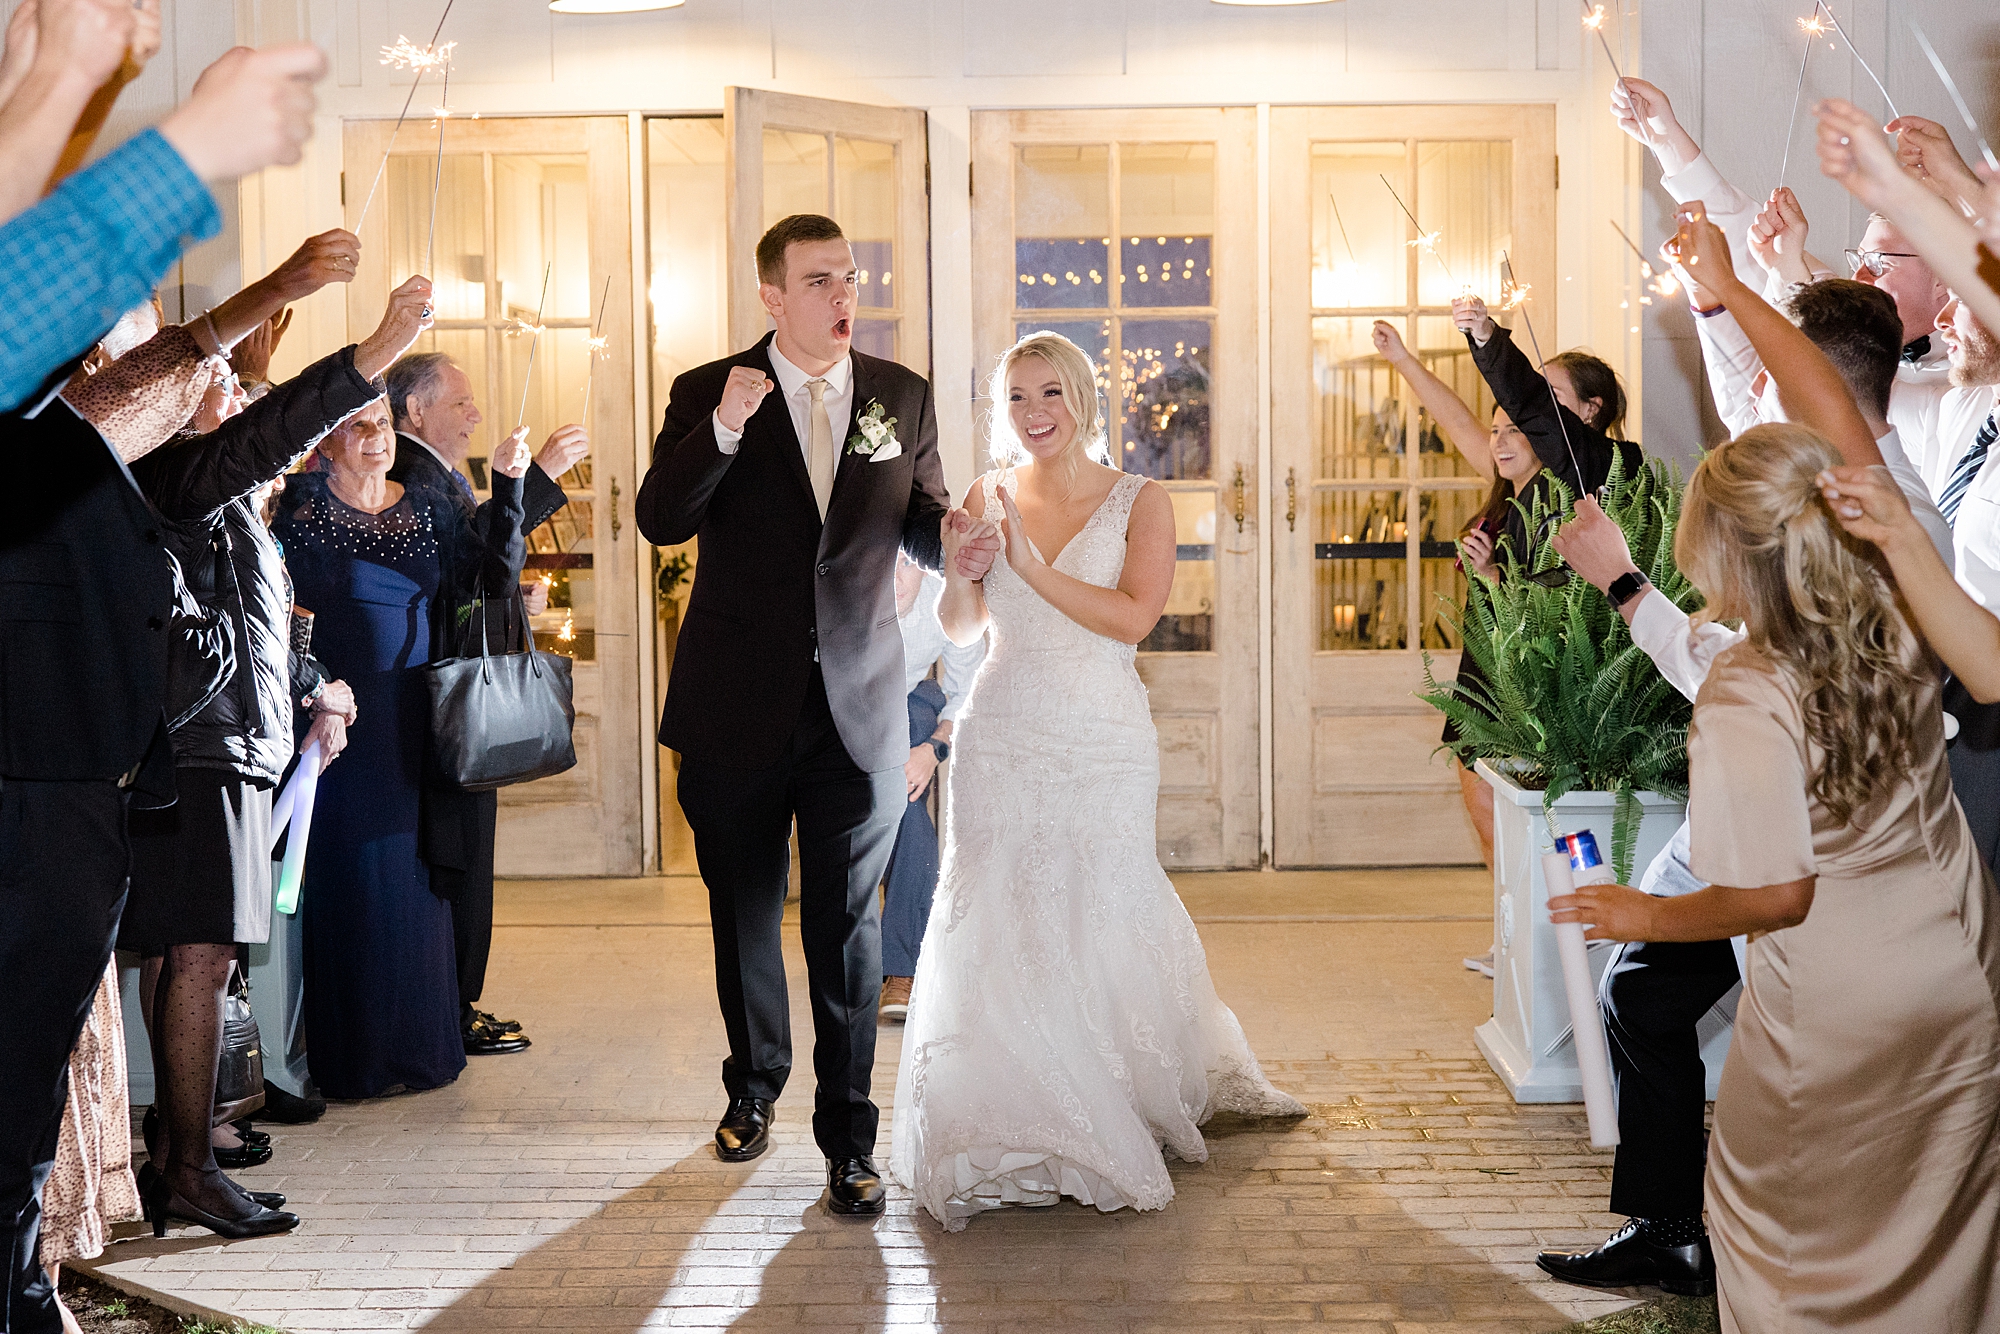 sparkler exit for bride and groom